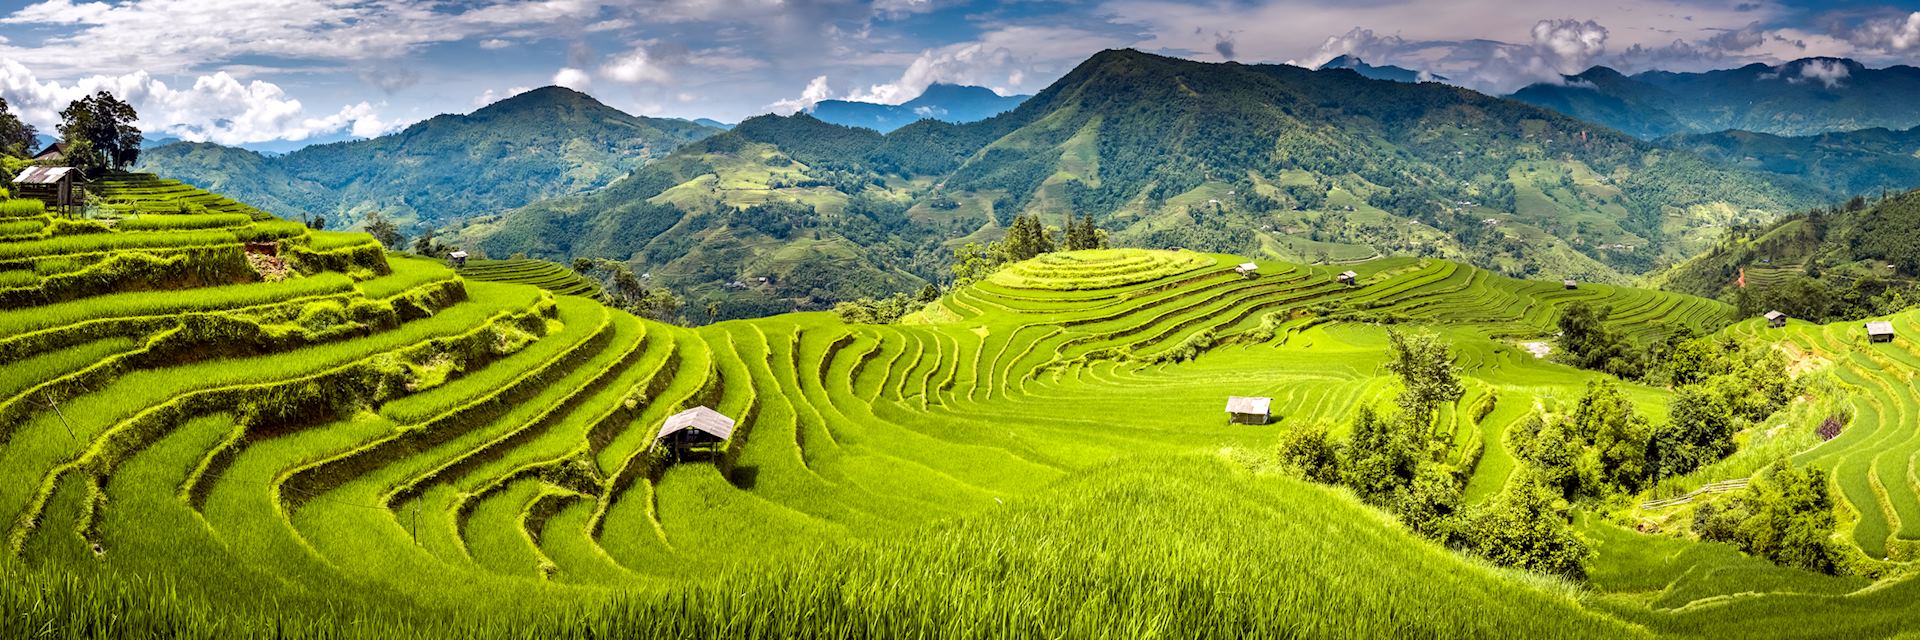 Rice fields in Sapa, Vietnam